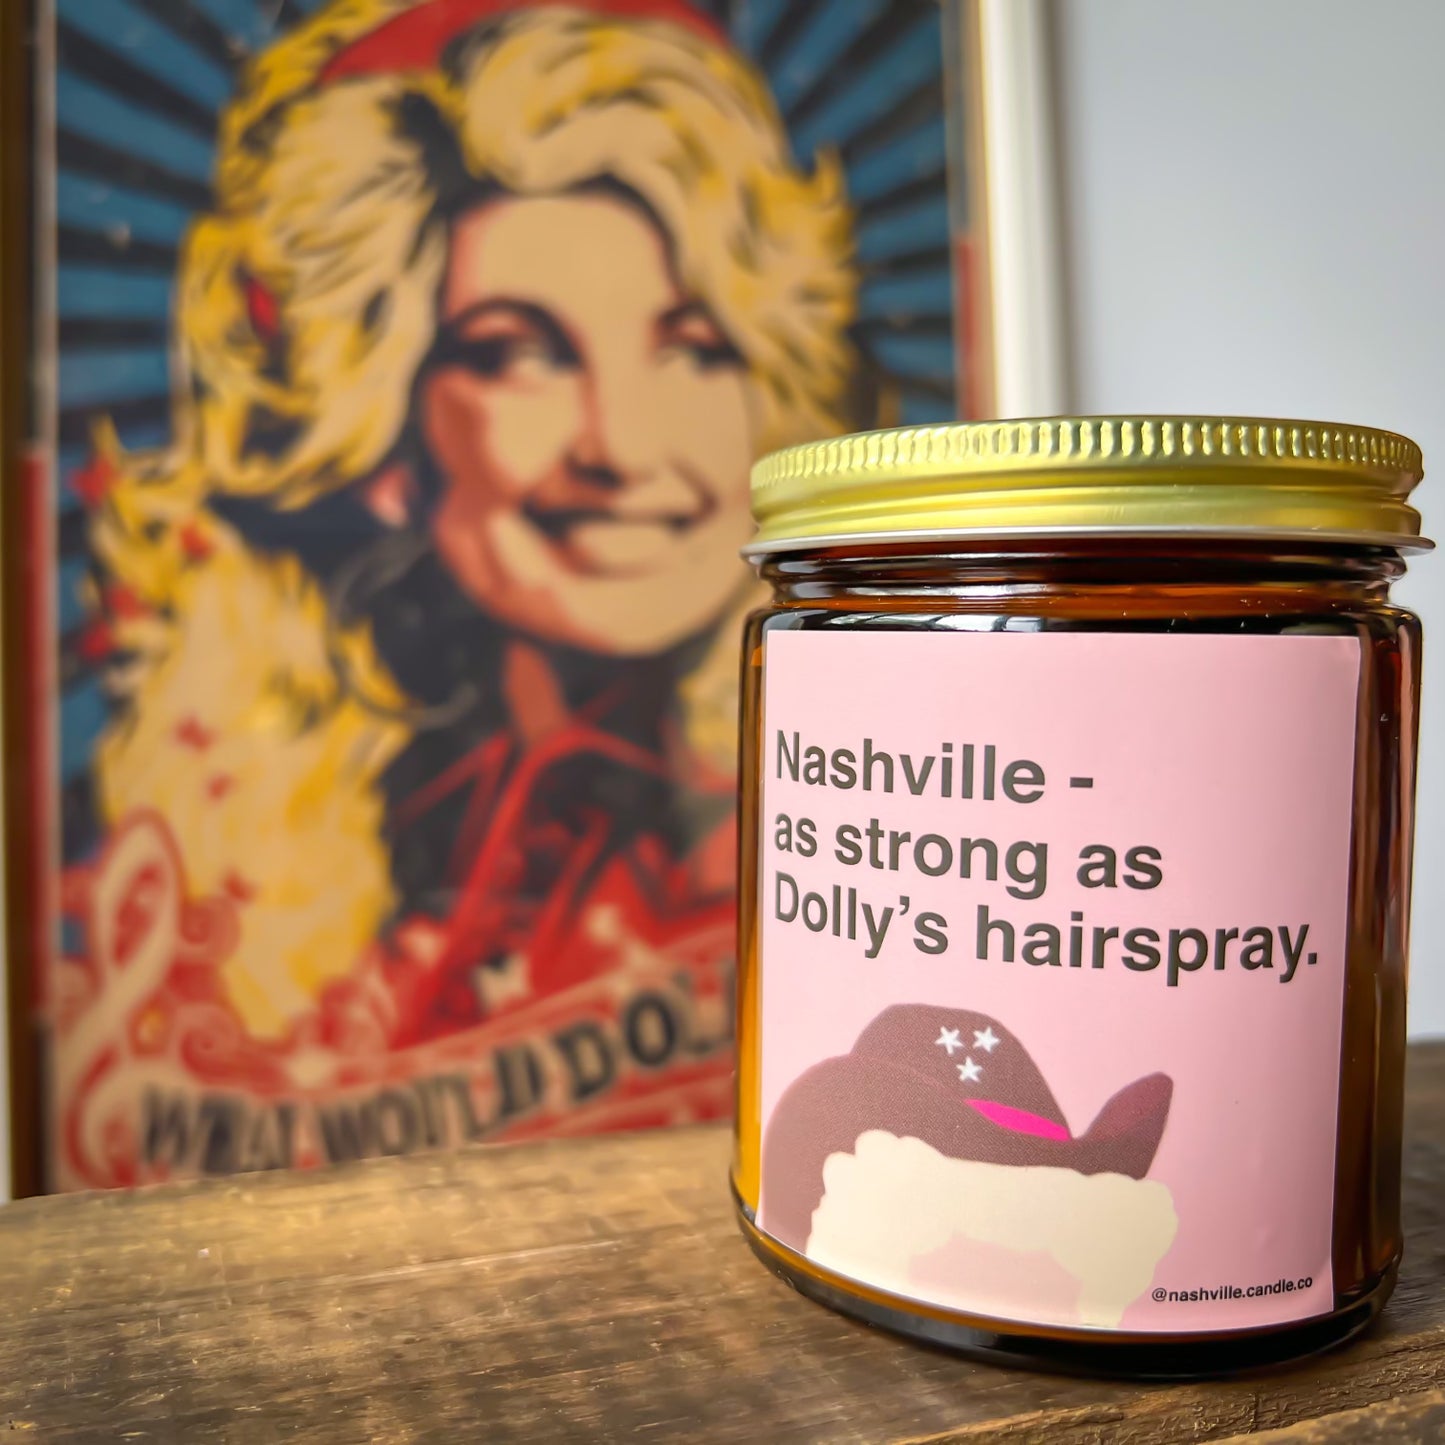 Nashville - as strong as Dolly's hairspray.